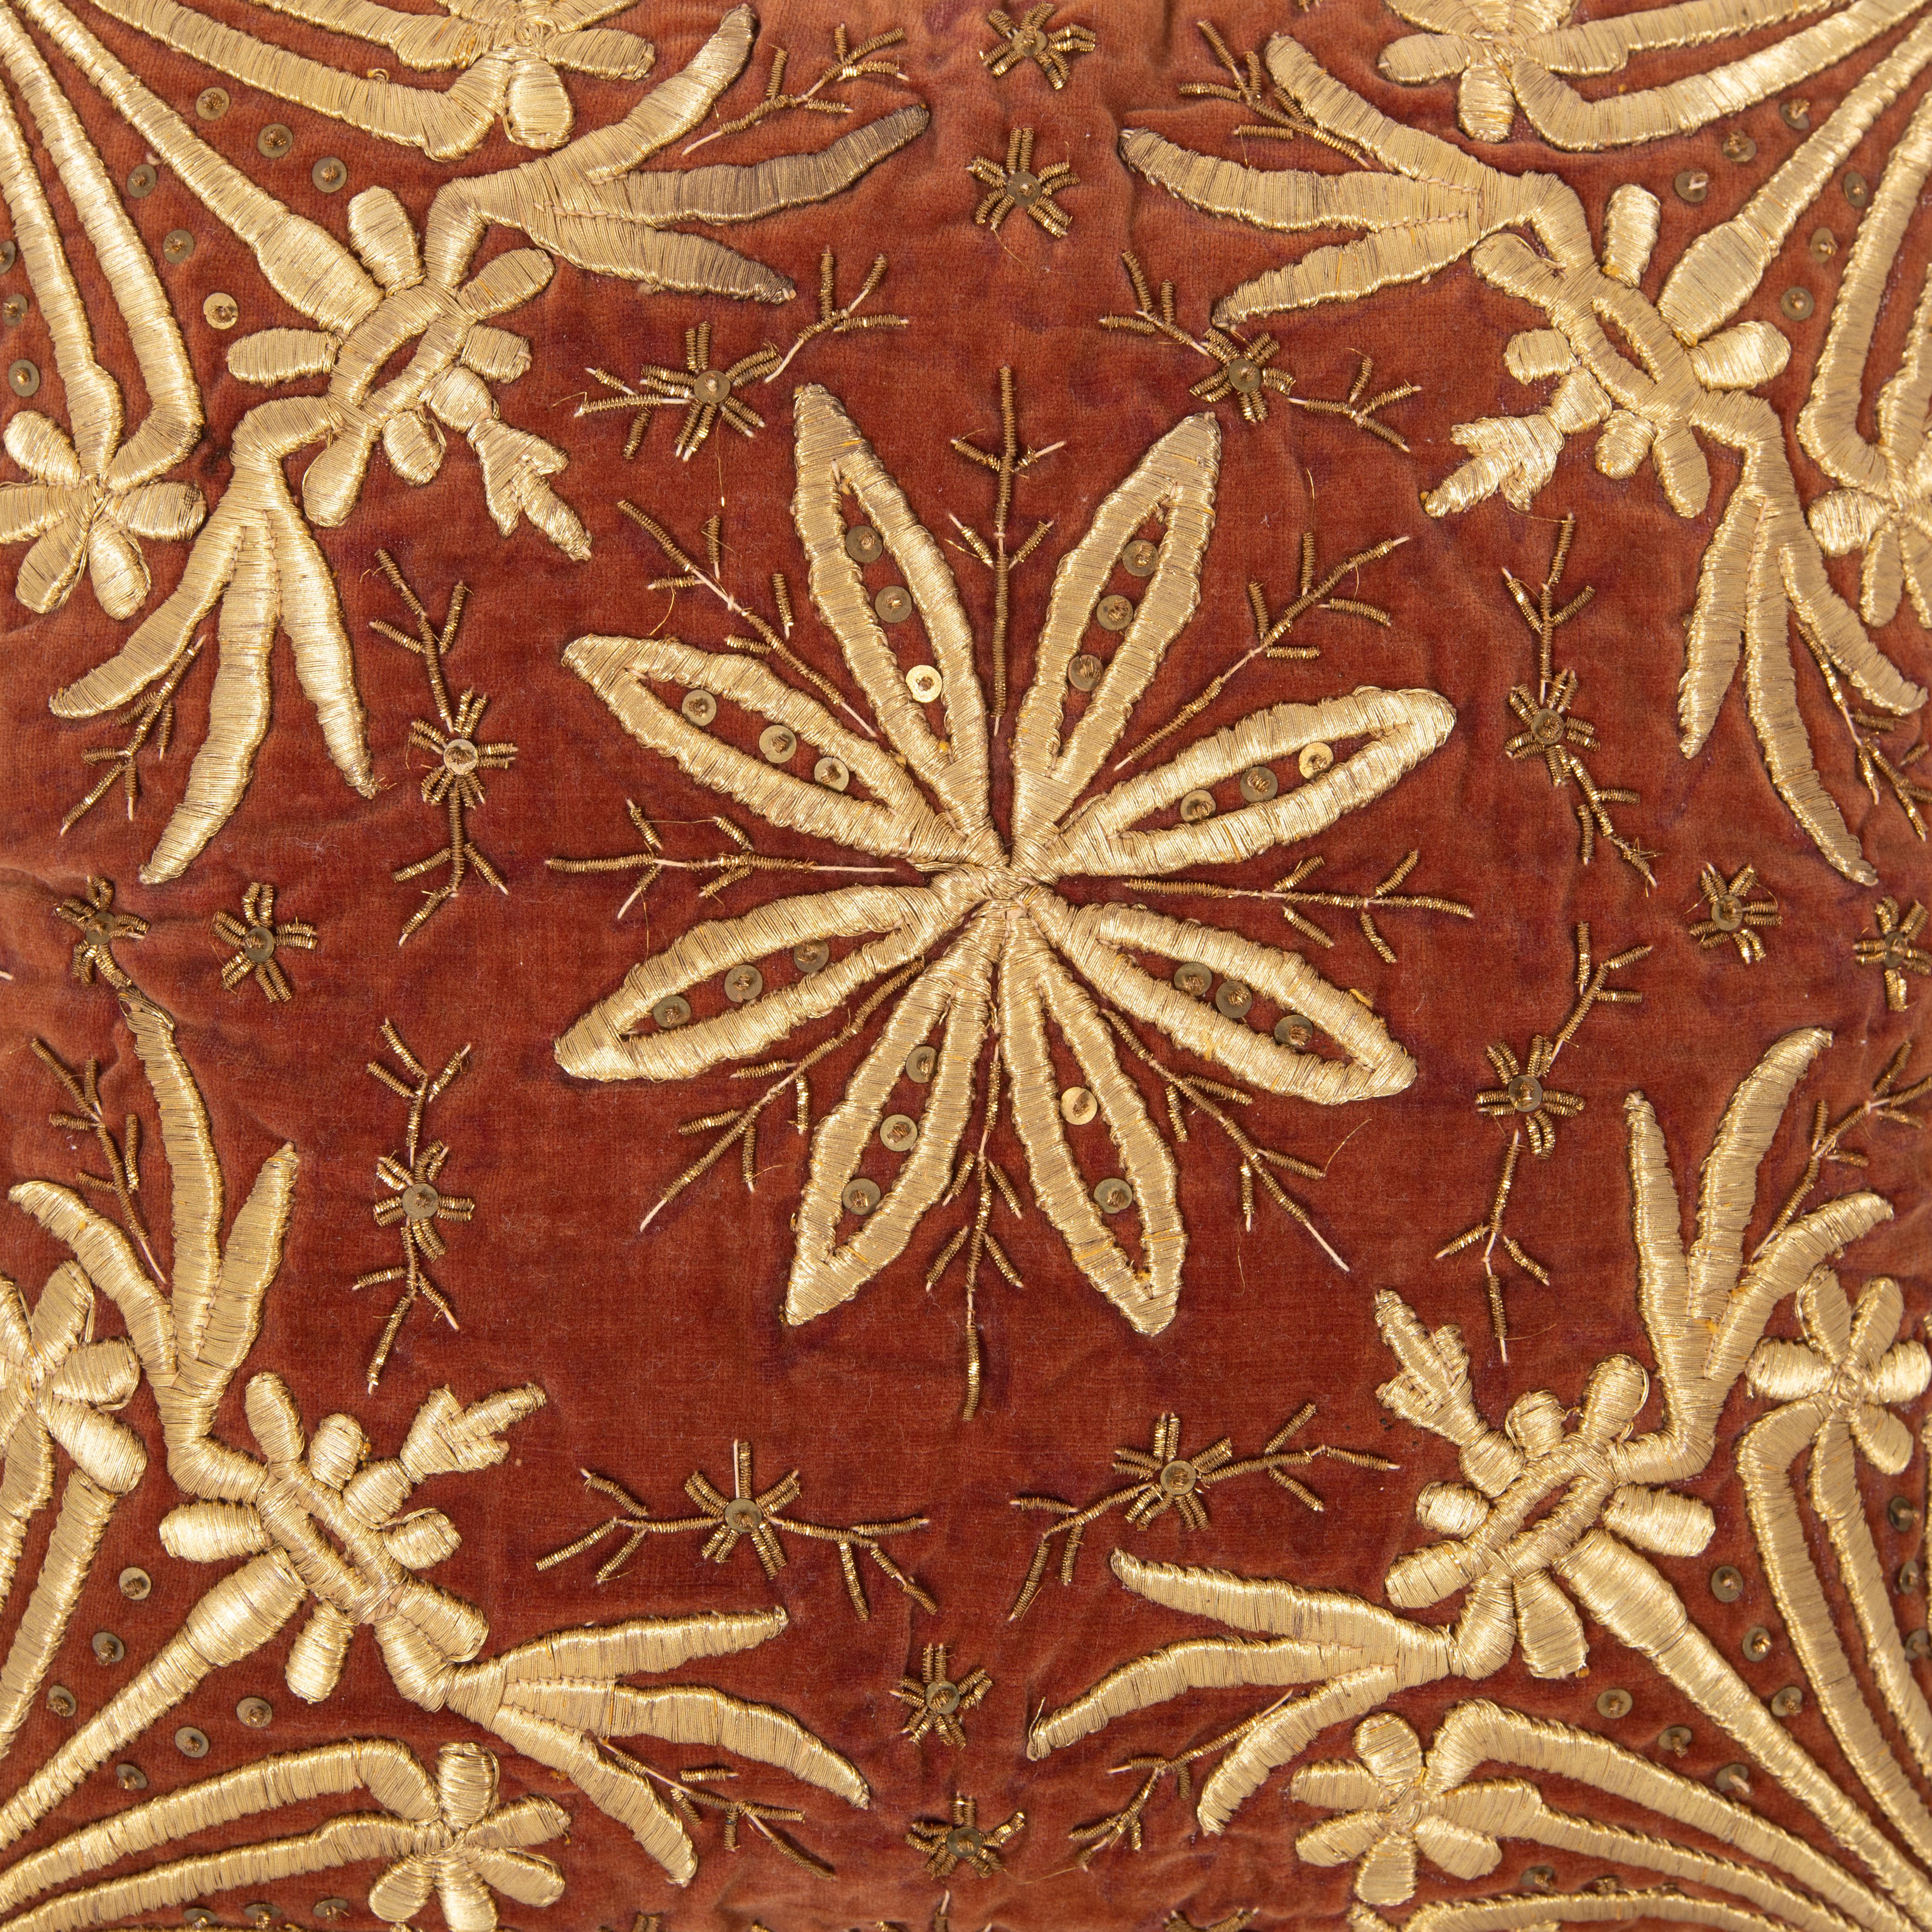 Turkish Antique Ottoman Velvet Sarma Pillow Cover, Early 20th C.